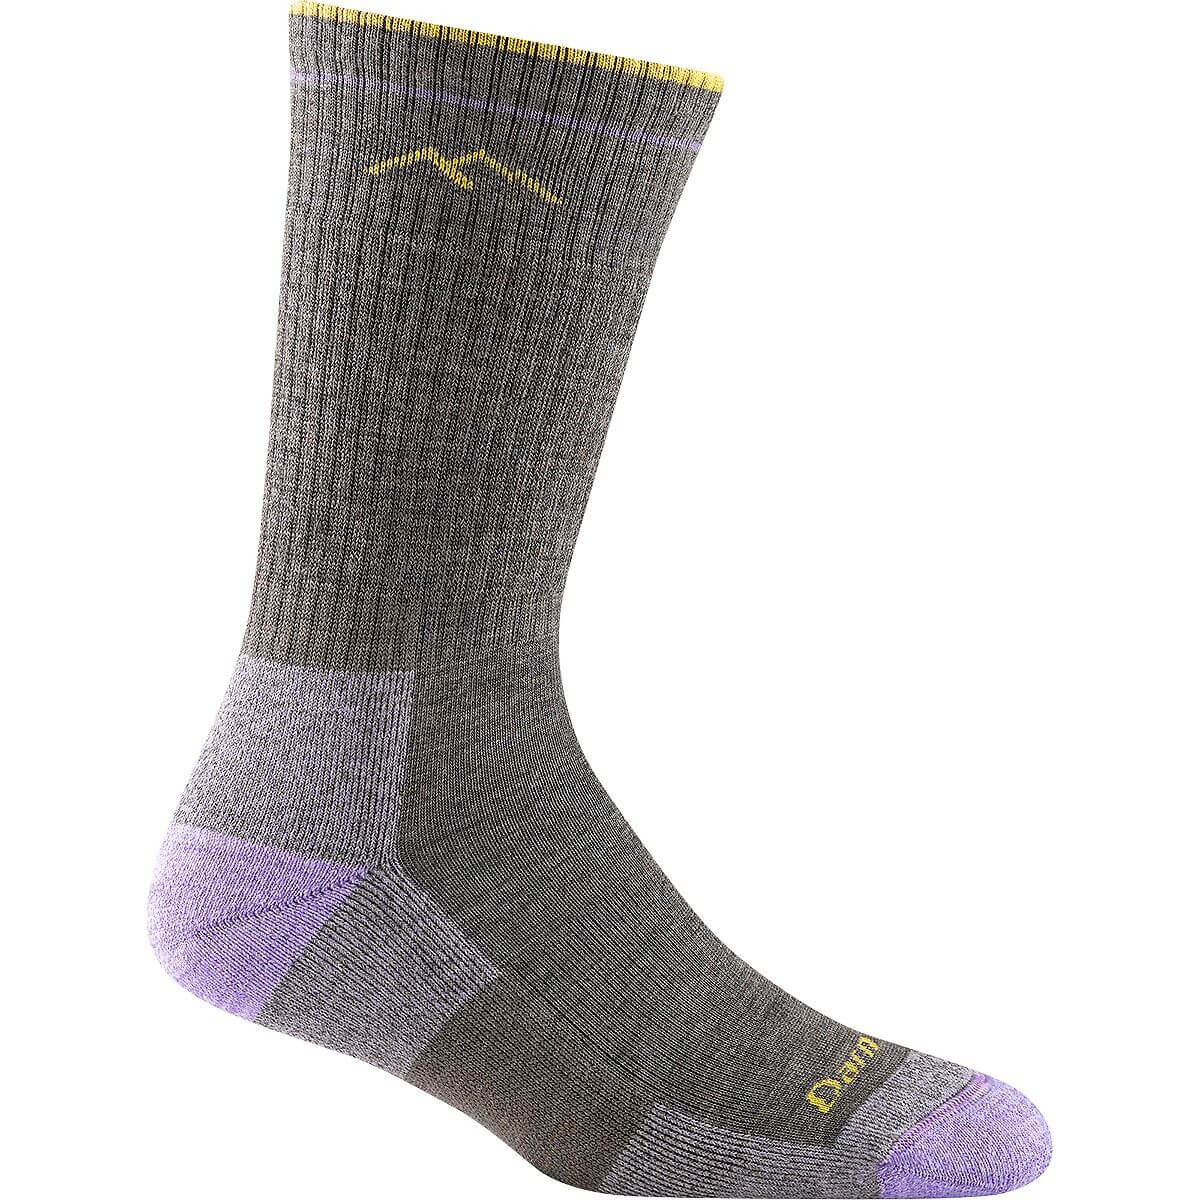 Носки женские Darn Tough Hiker Boot Cushion, серо-коричневый/мультиколор christmas compression sock 5 or 6 pairs per set sock sport christmas gift sock